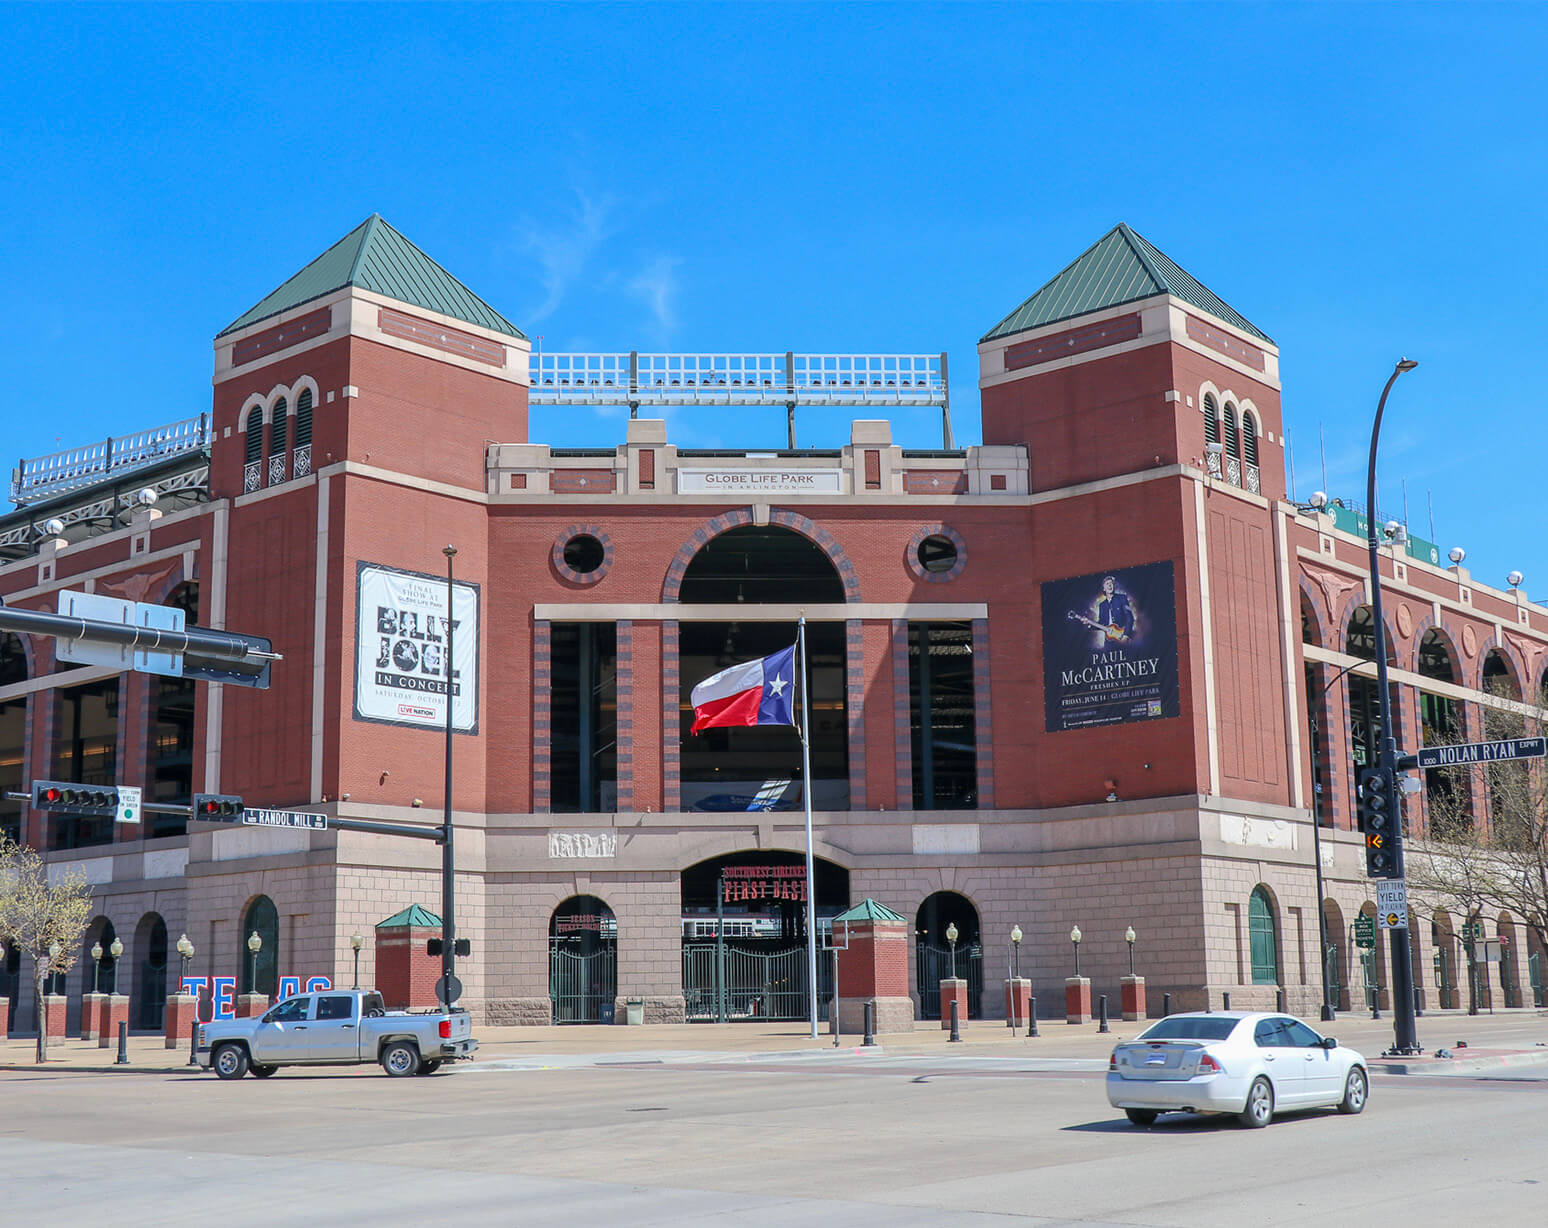 Where do the Texas Rangers play baseball?